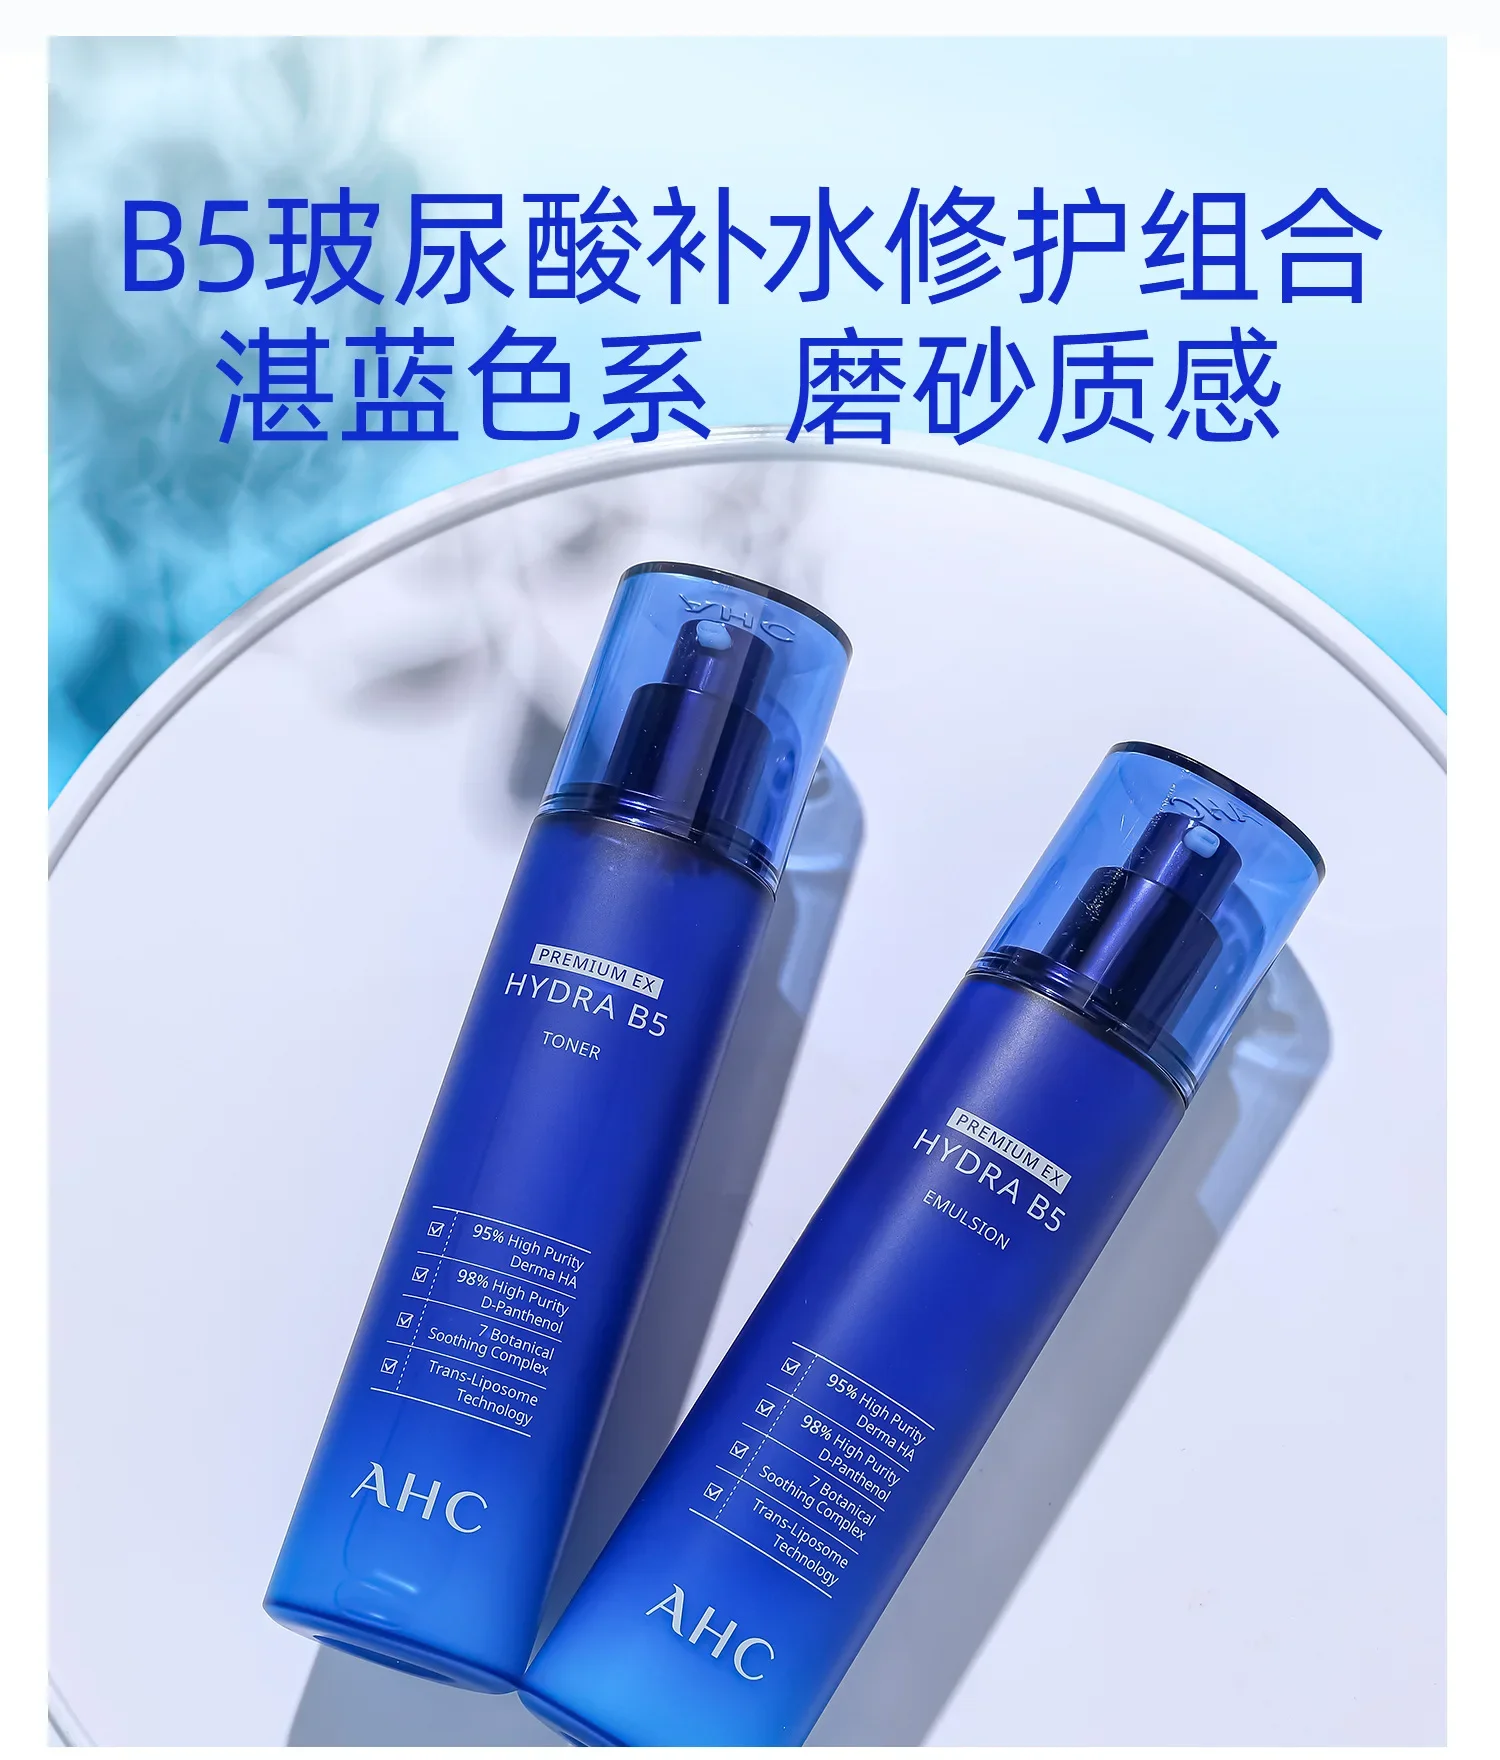 

AHC Korean Skin Care Product Hyaluronic Acid B5 Skincare Set 280ml Toner Moisturizing Water Hydrate Lotion Emulsion High Quality